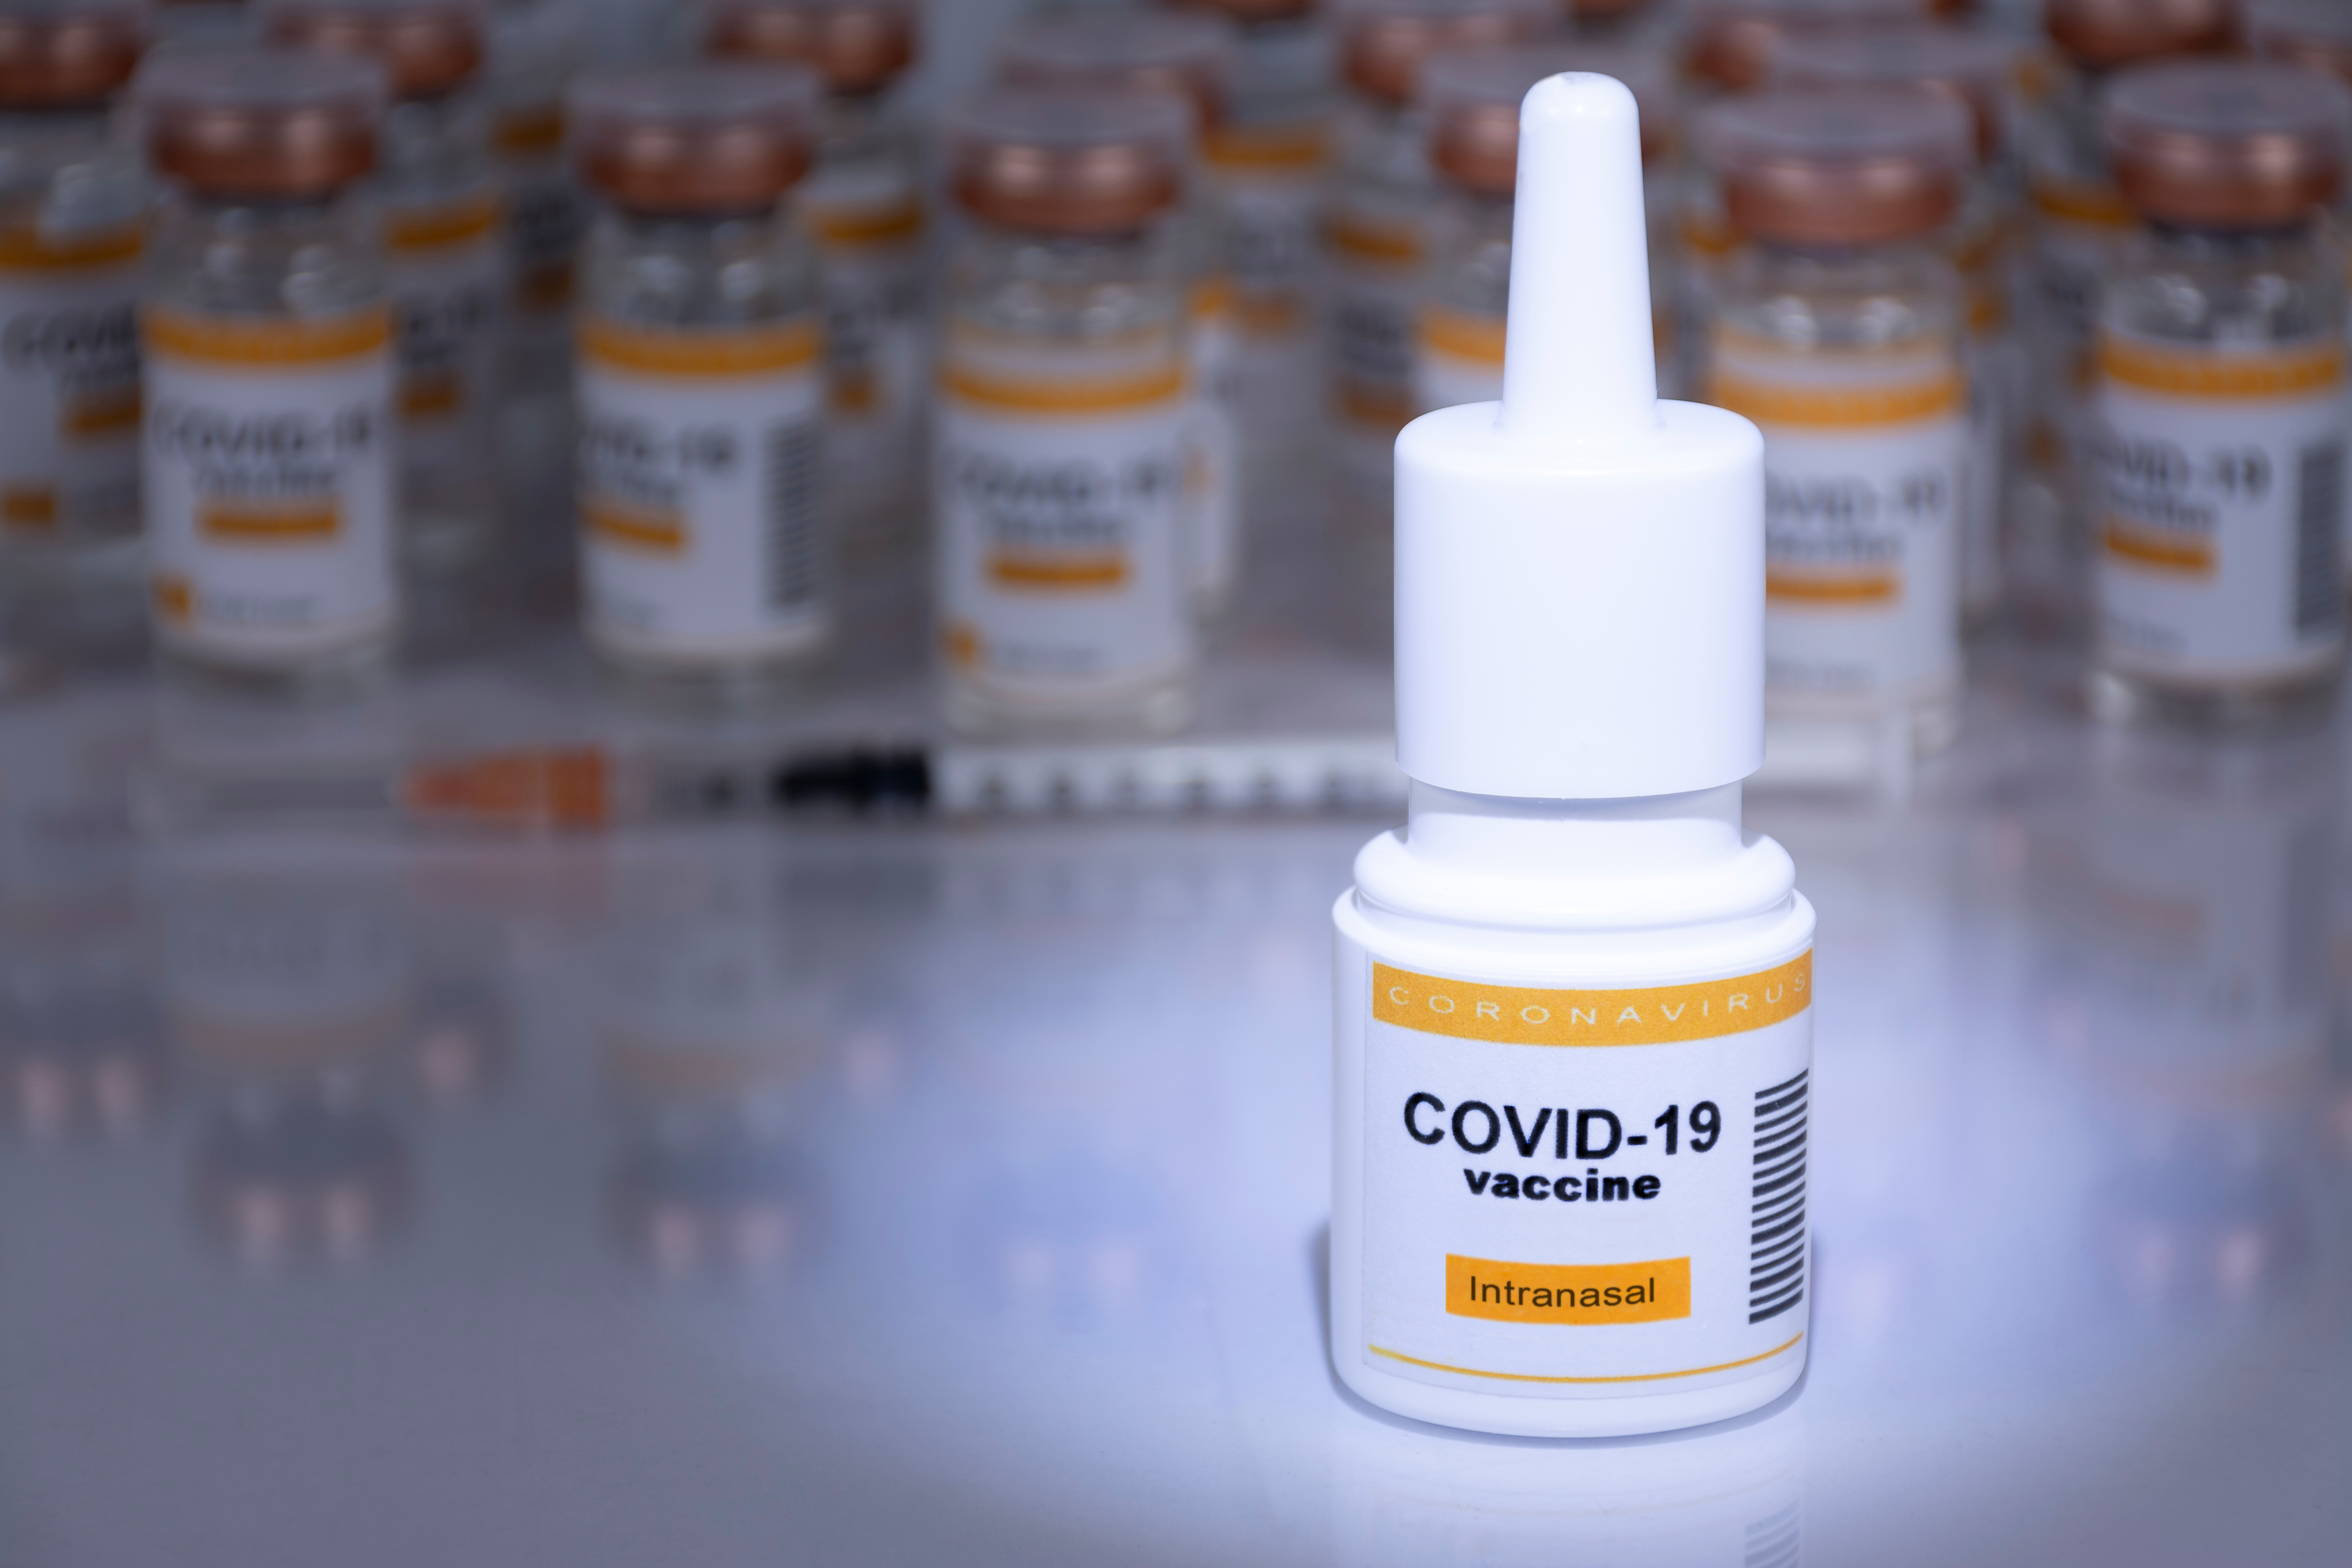 Inhalable COVID-19 vaccine nasal spray